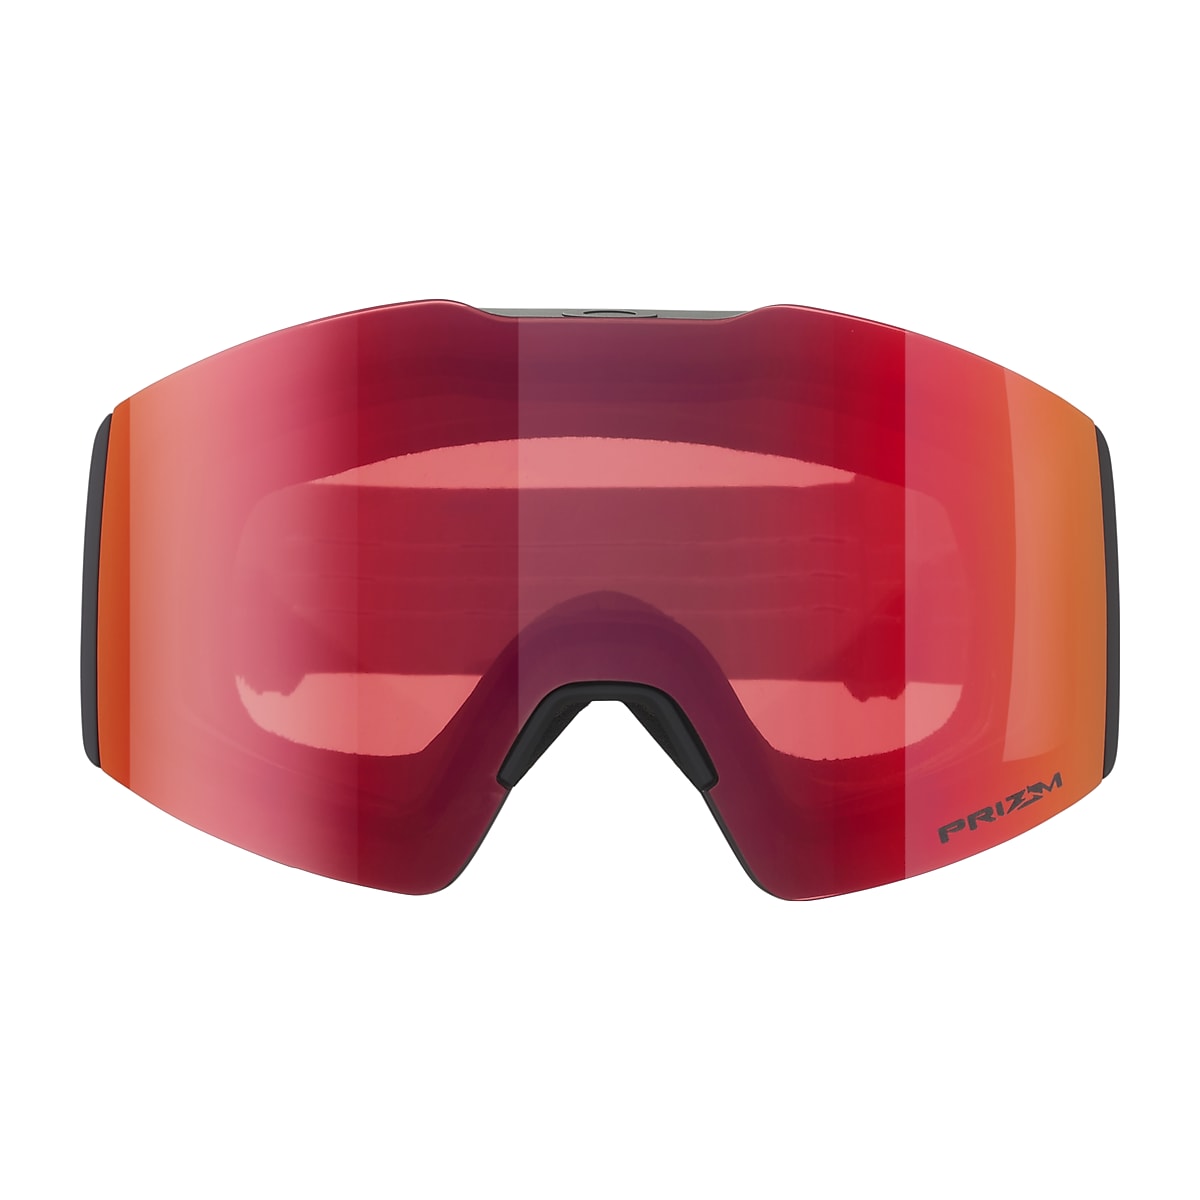 Oakley Fall Line M Snow Goggles - Red Haze - Prizm Snow Torch Iridium -  OO7103-50 | Oakley US Store